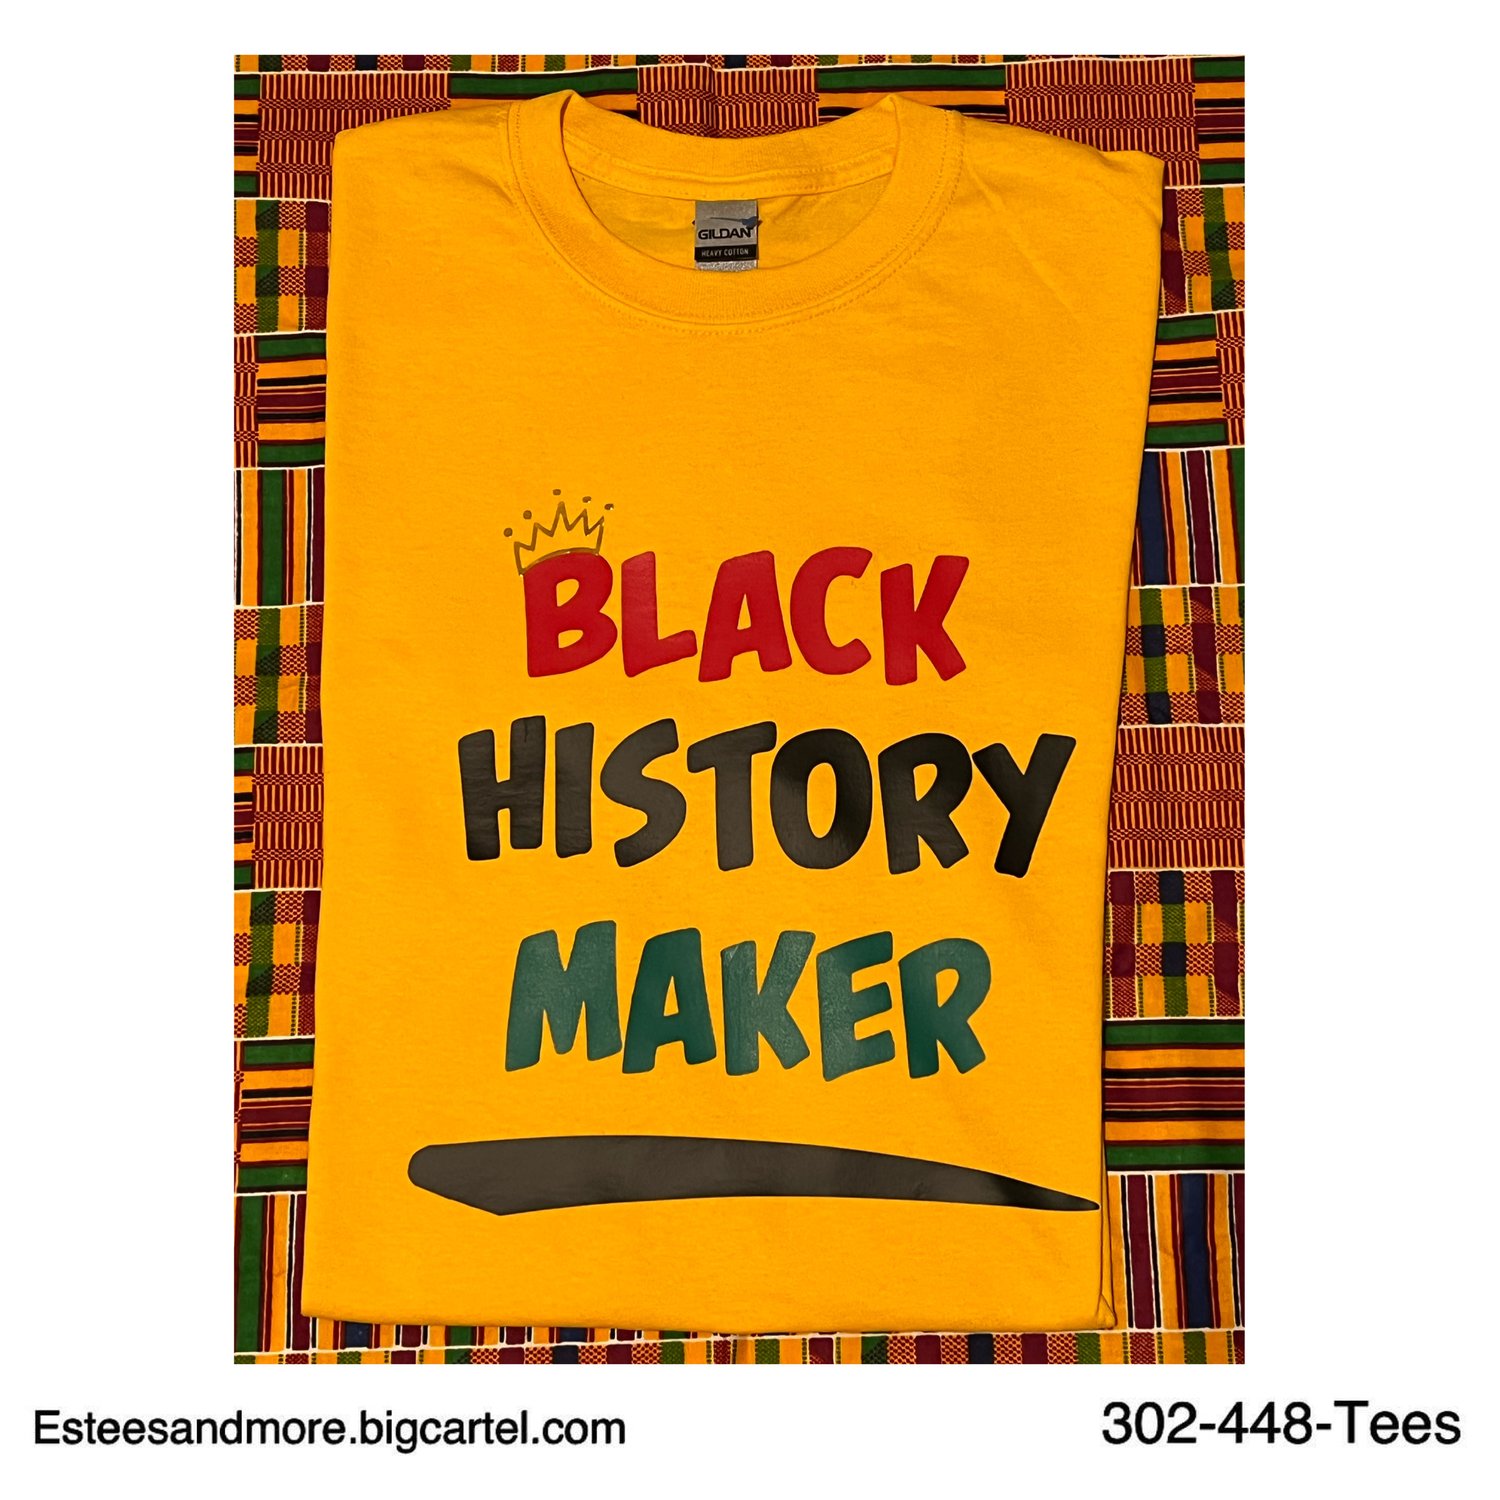 Image of The Black History Maker 